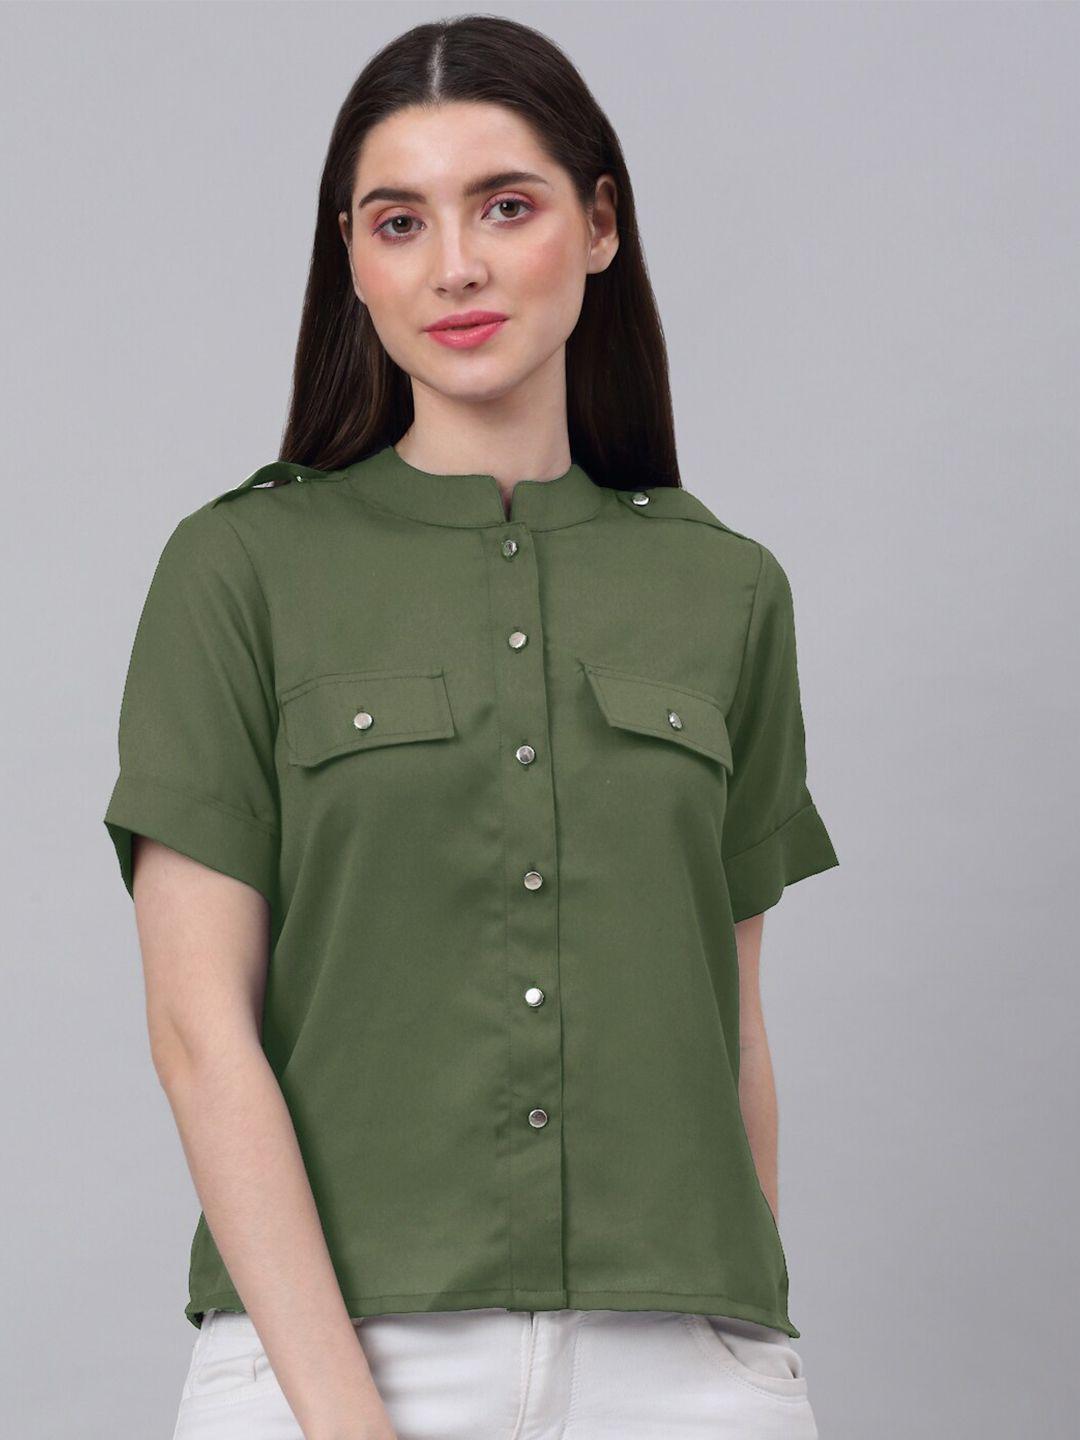 neudis women olive green mandarin collar shirt style top